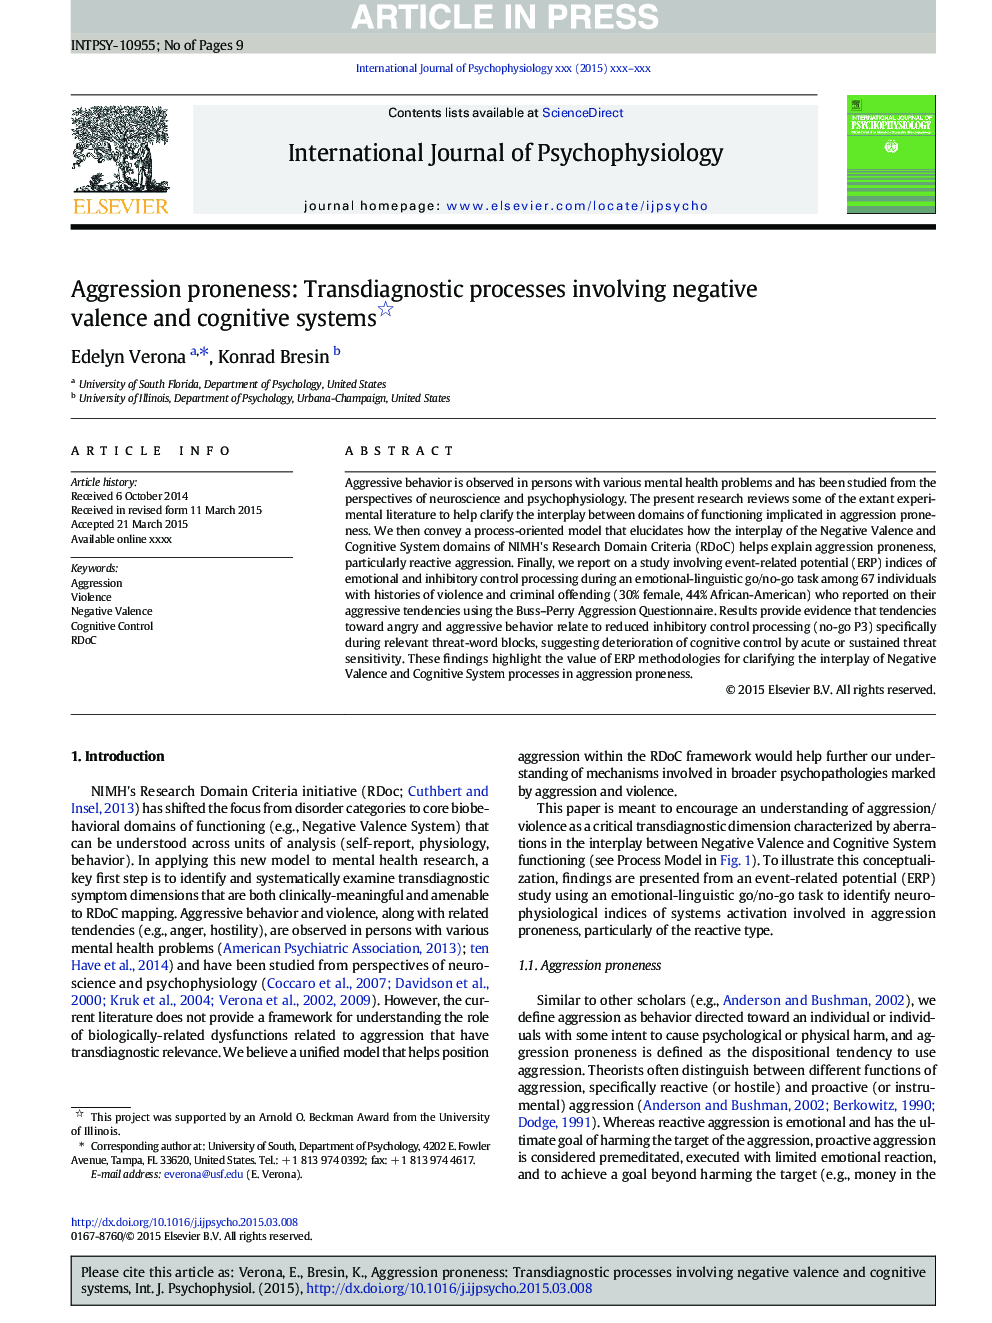 Aggression proneness: Transdiagnostic processes involving negative valence and cognitive systems